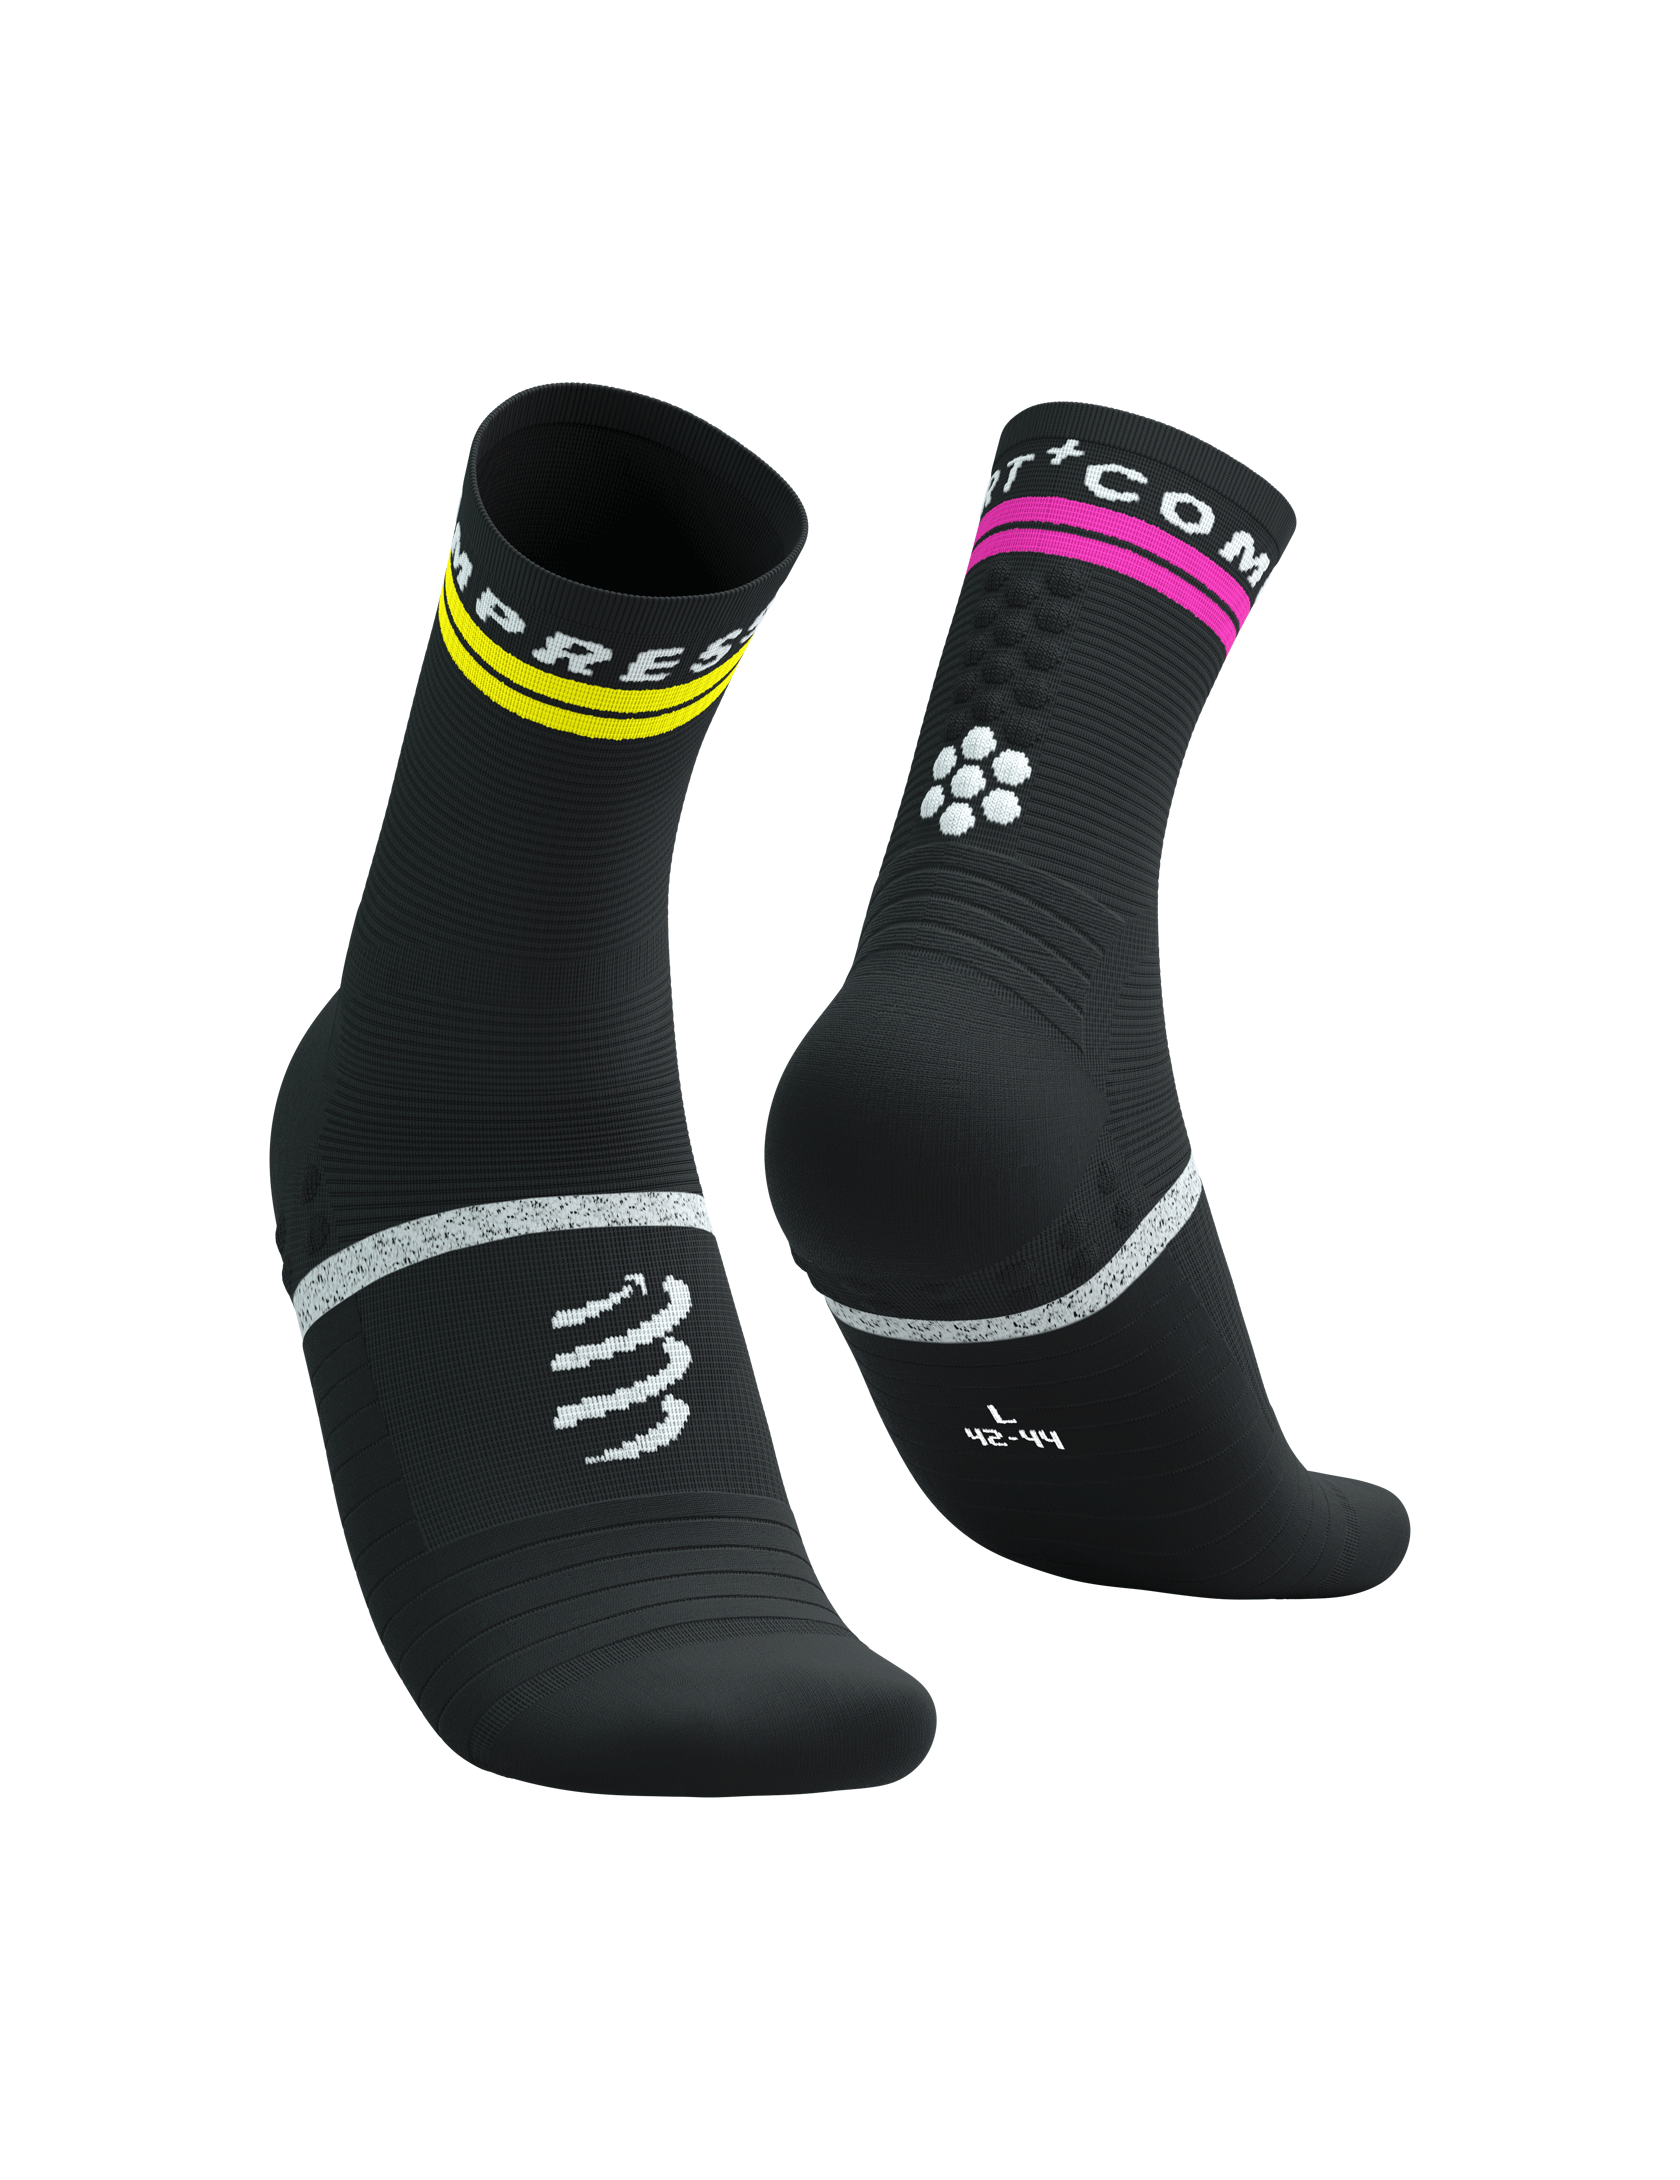 Pro Marathon Socks V2.0 - Black Yellow Pink | Sport socks | Compressport